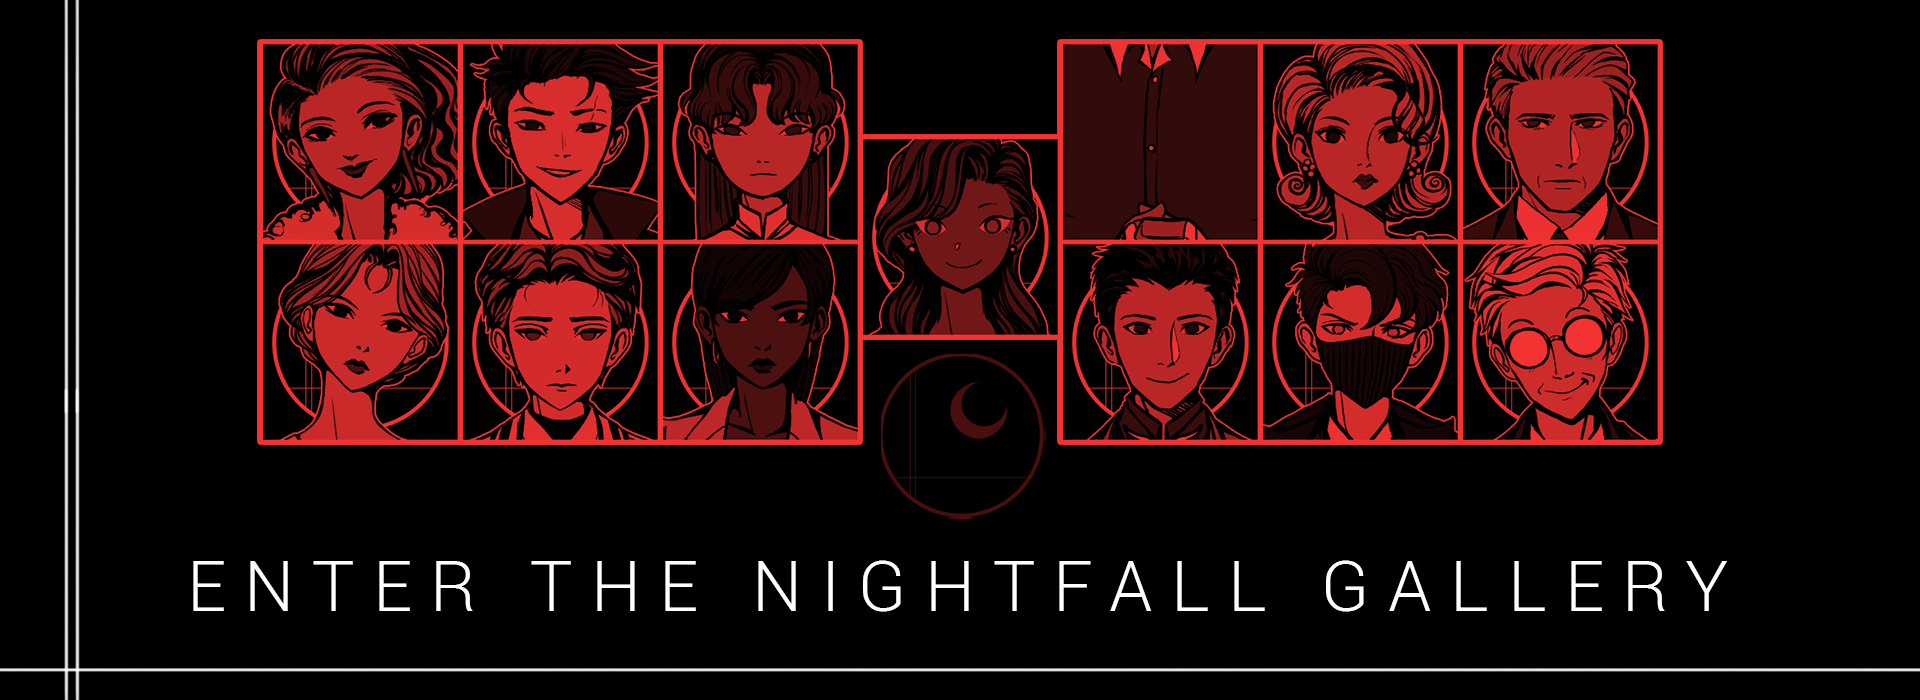 Enter the Nightfall Gallery